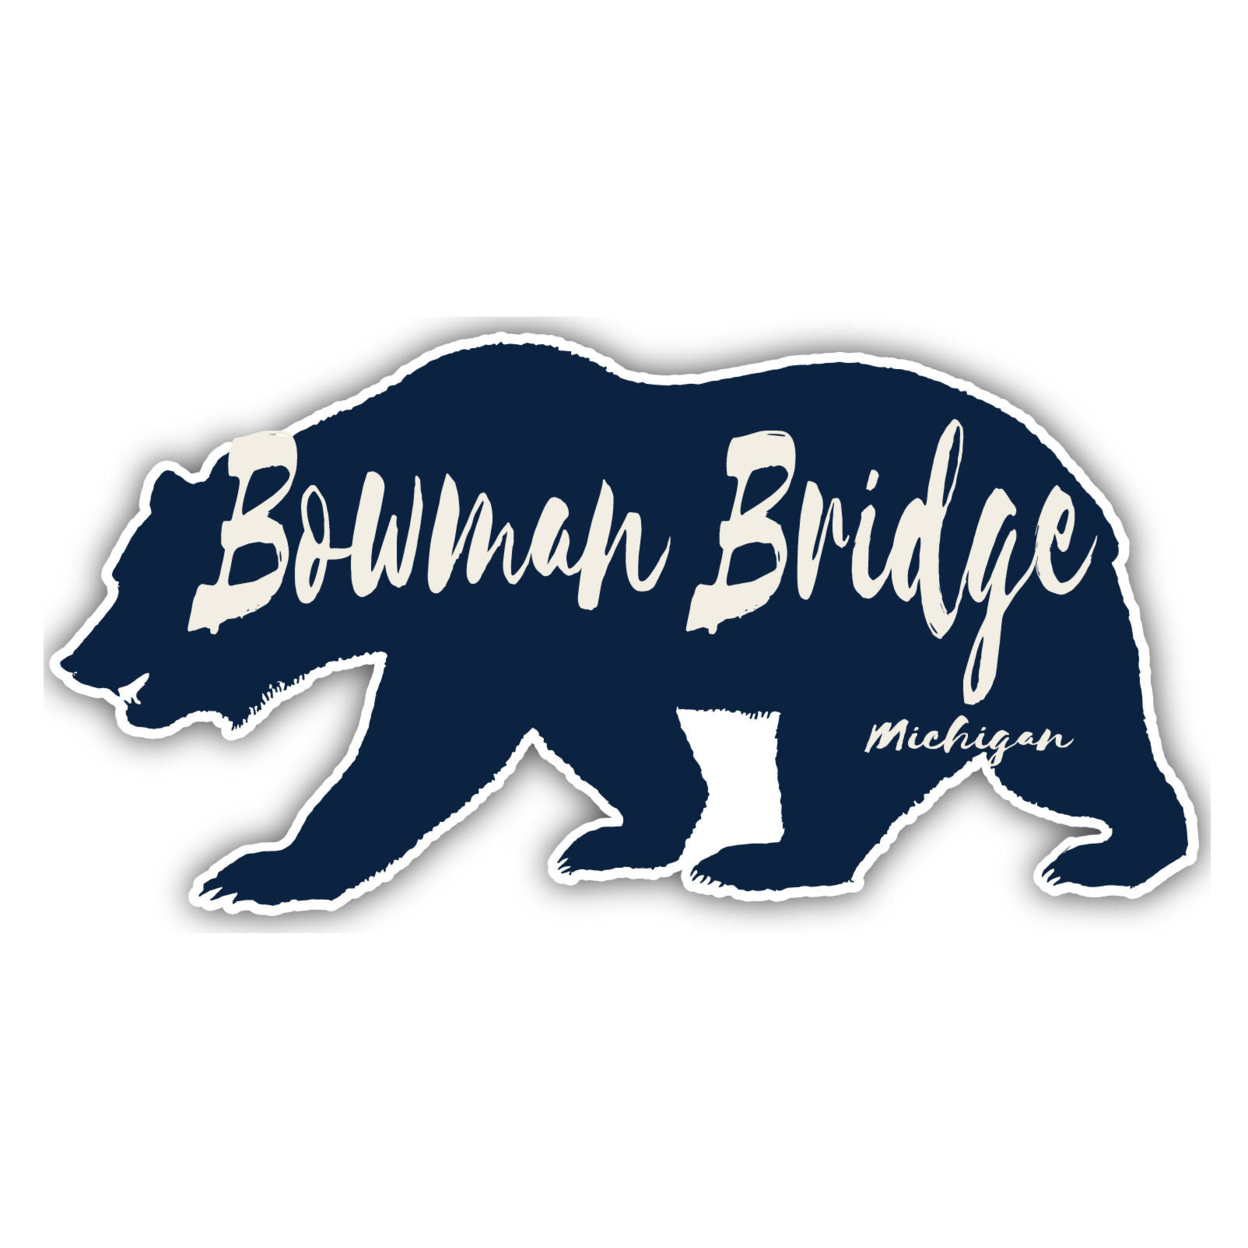 Bowman Bridge Michigan Souvenir Decorative Stickers (Choose Theme And Size) - 4-Pack, 2-Inch, Bear